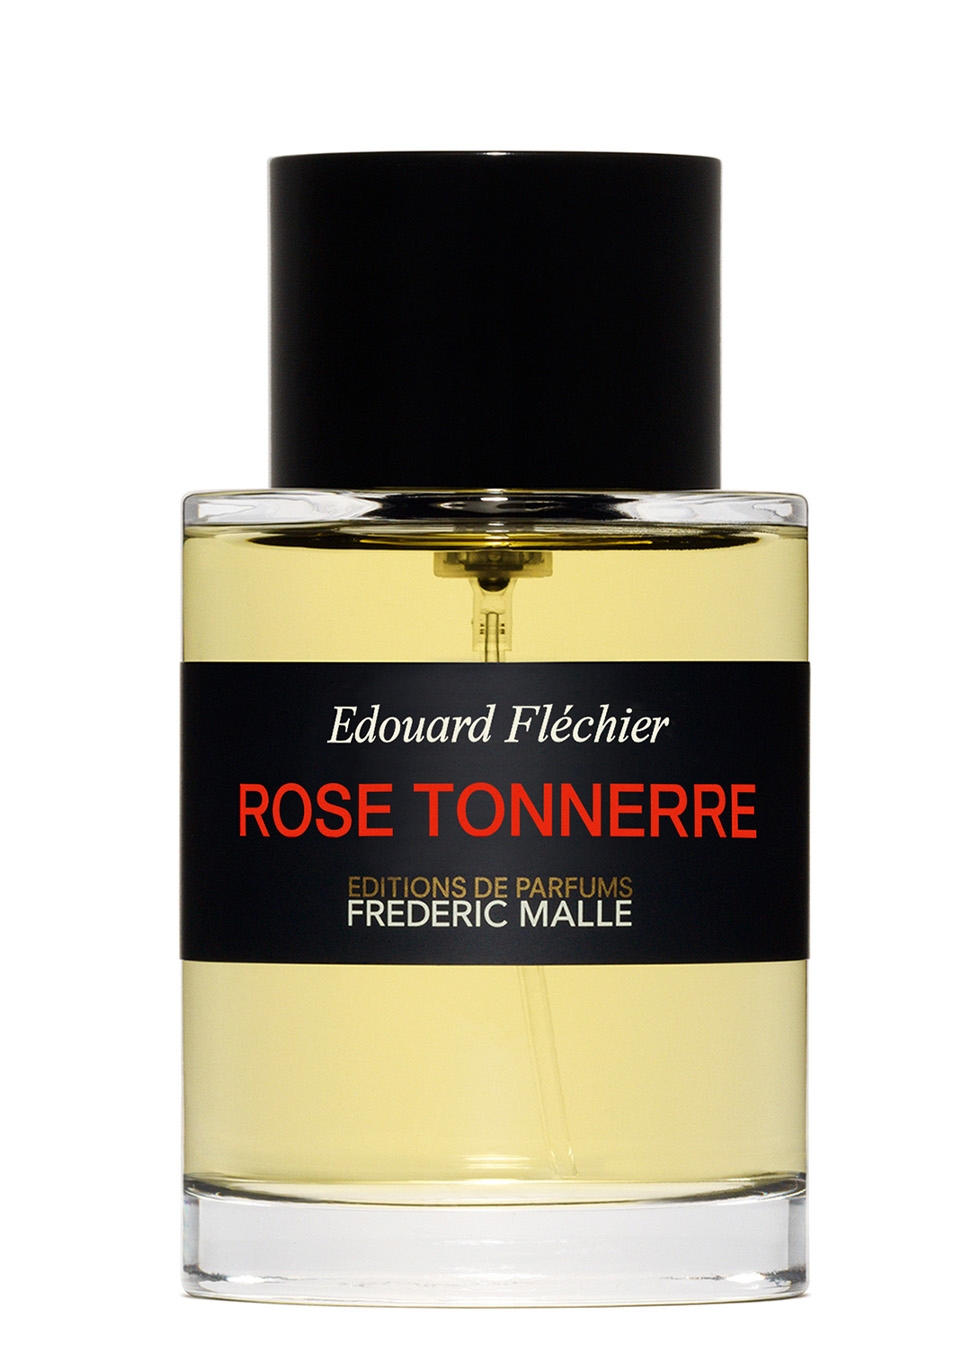 editions de parfums frederic malle rose tonnerre